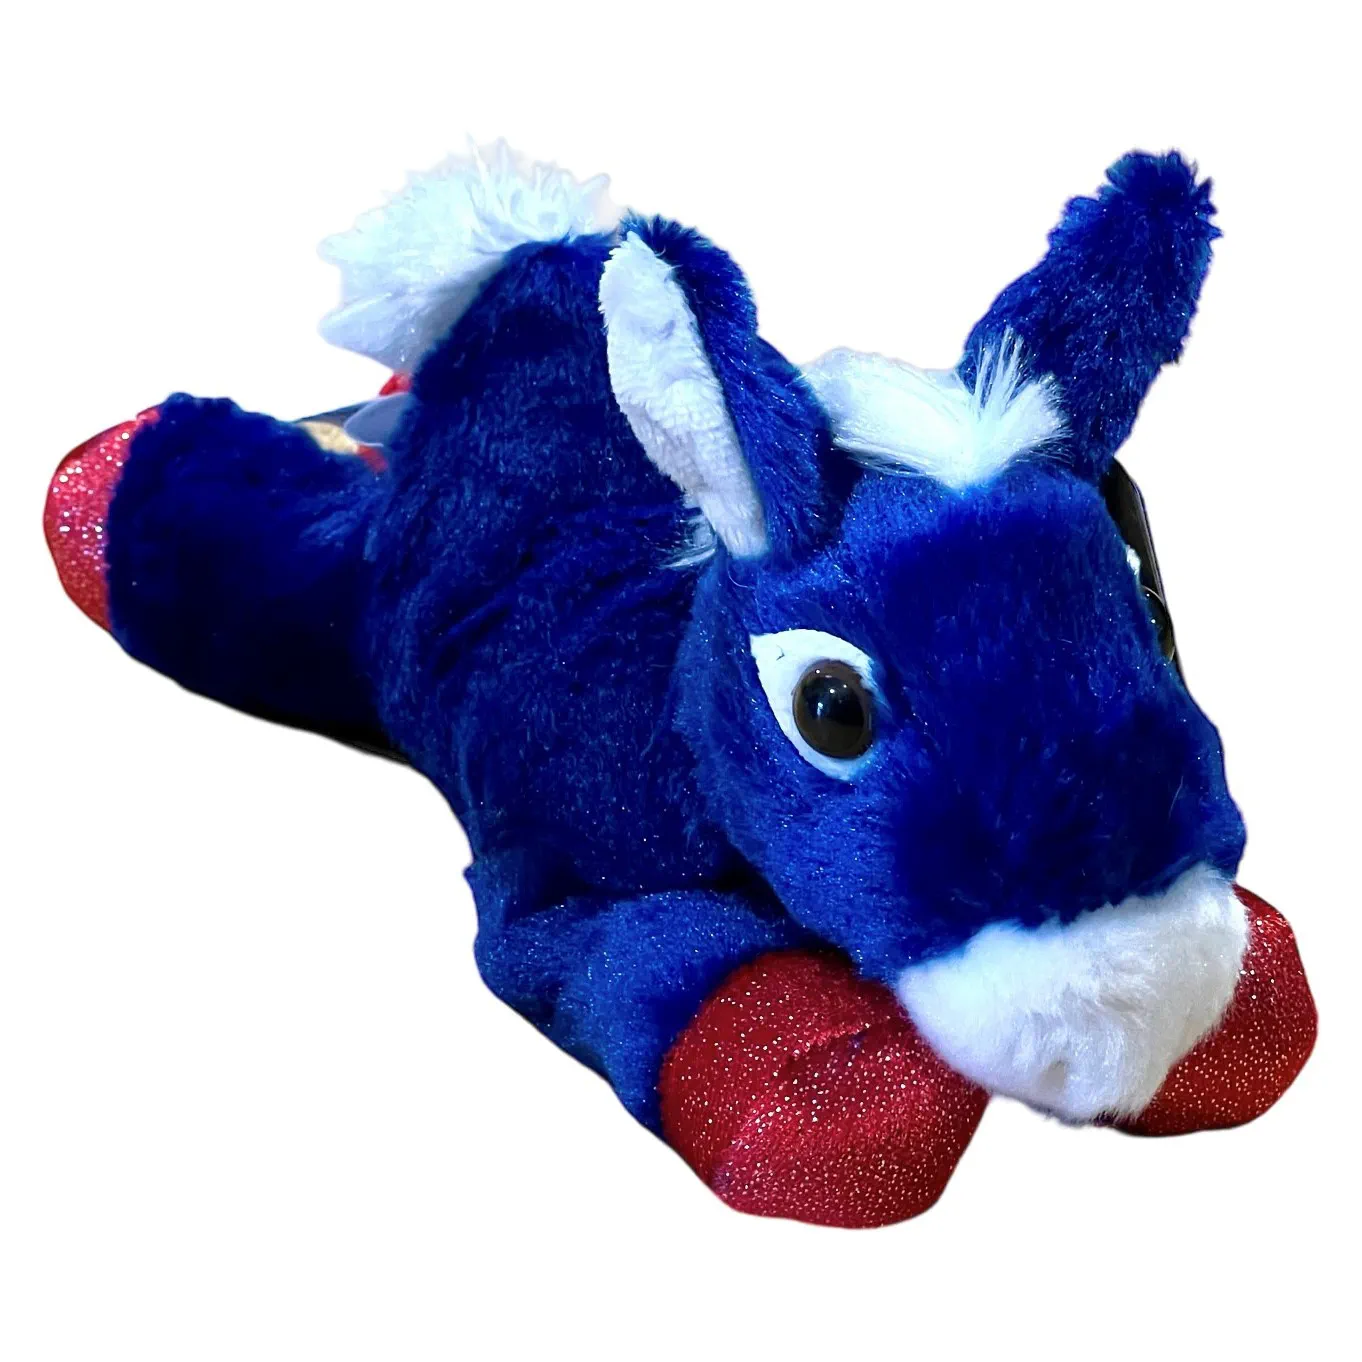 red white and blue stuffed animal donkey